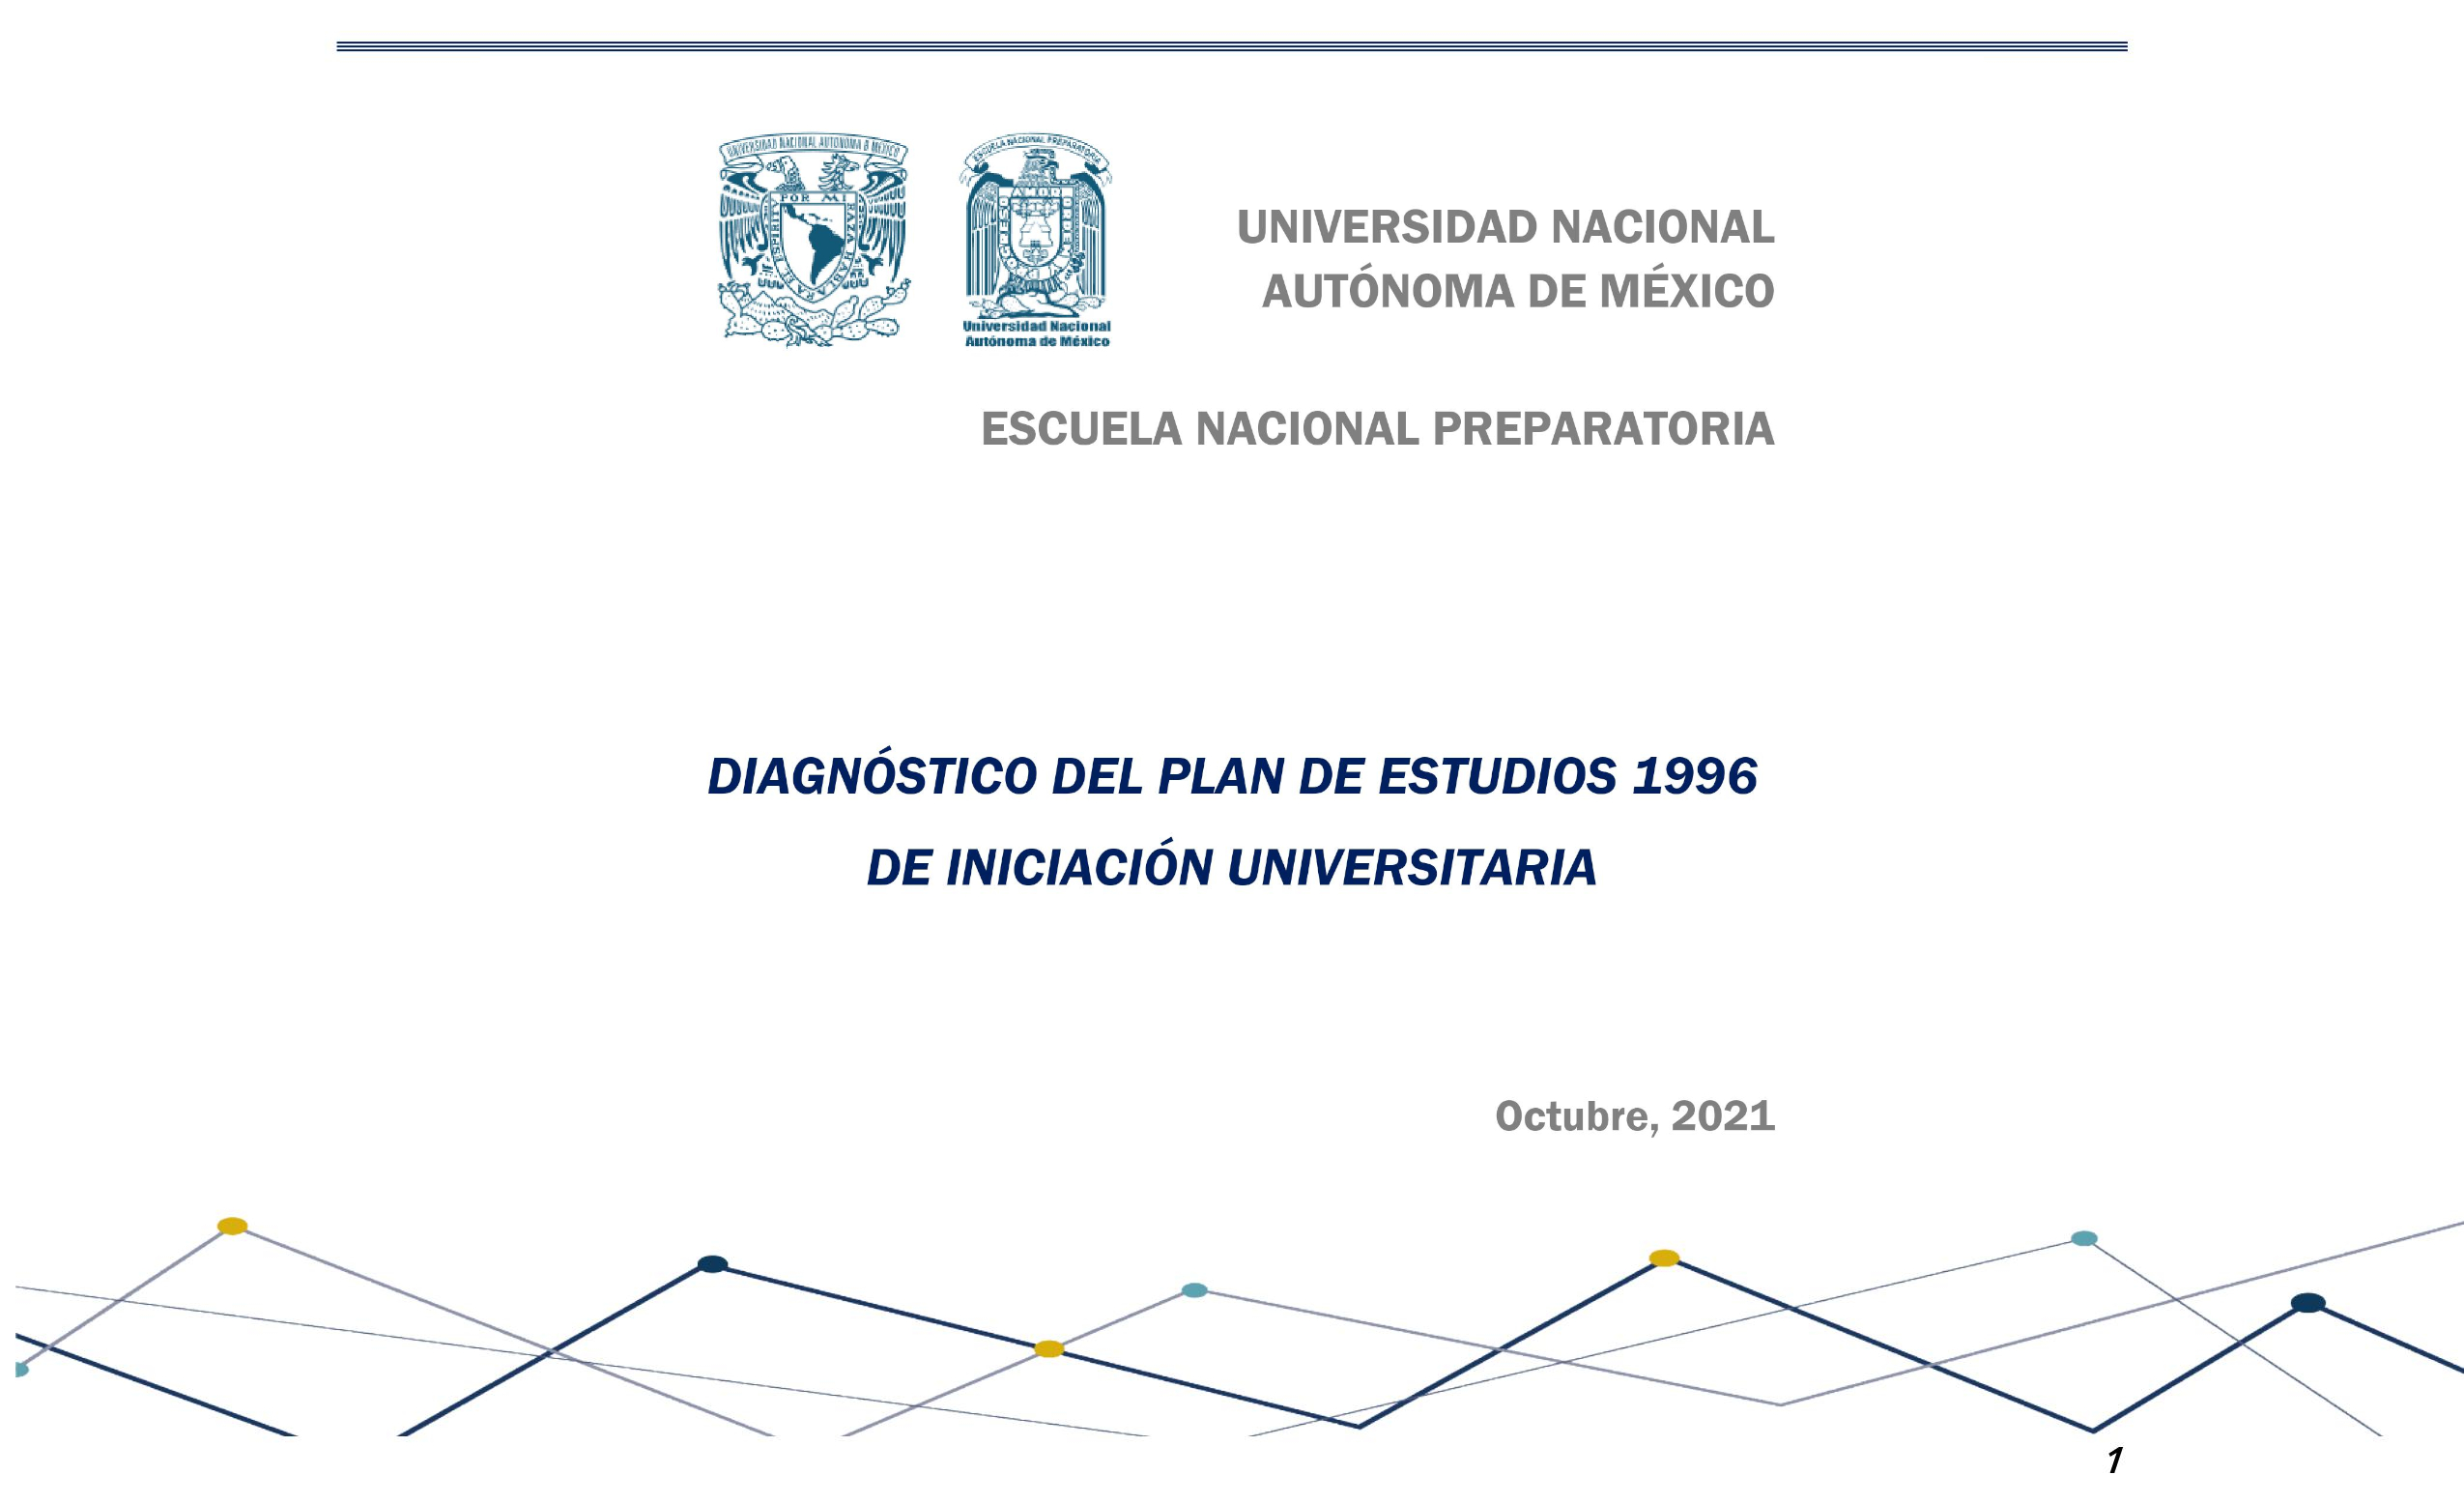 Diagnóstico del Plan de Estudios 1996 de IU